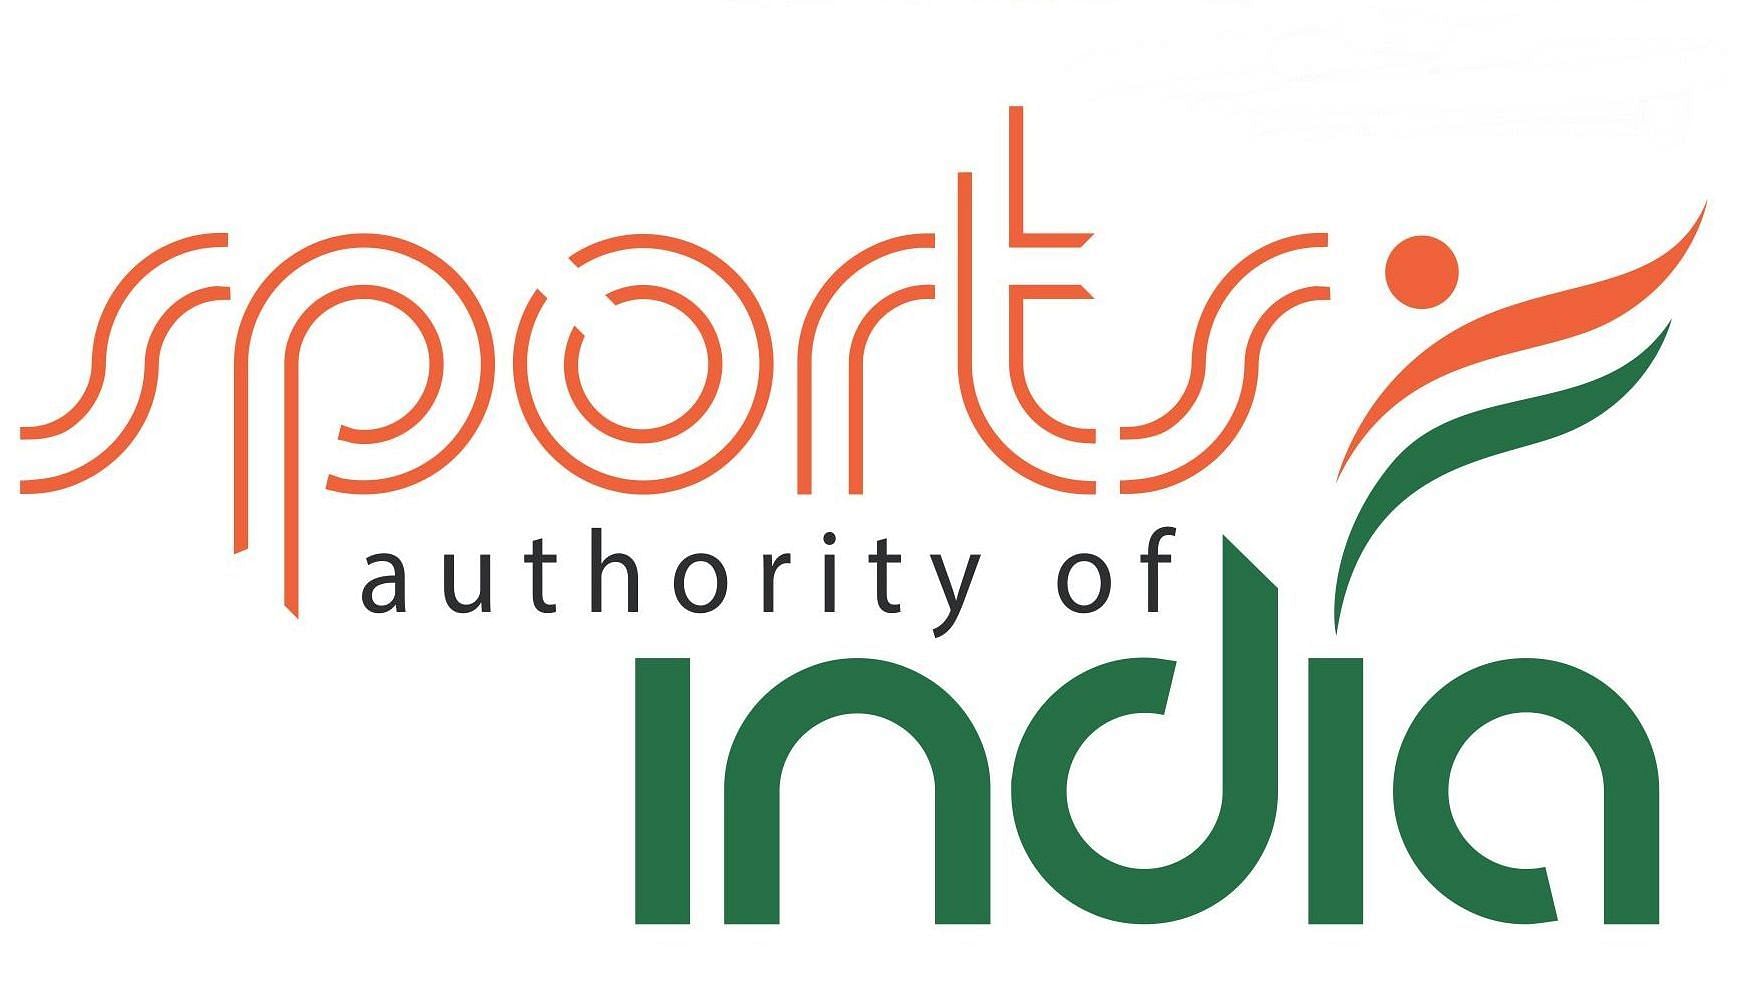 Central Bureau of Investigation (CBI) on Thursday, 17 January raided the premises of Sports Authority of India.